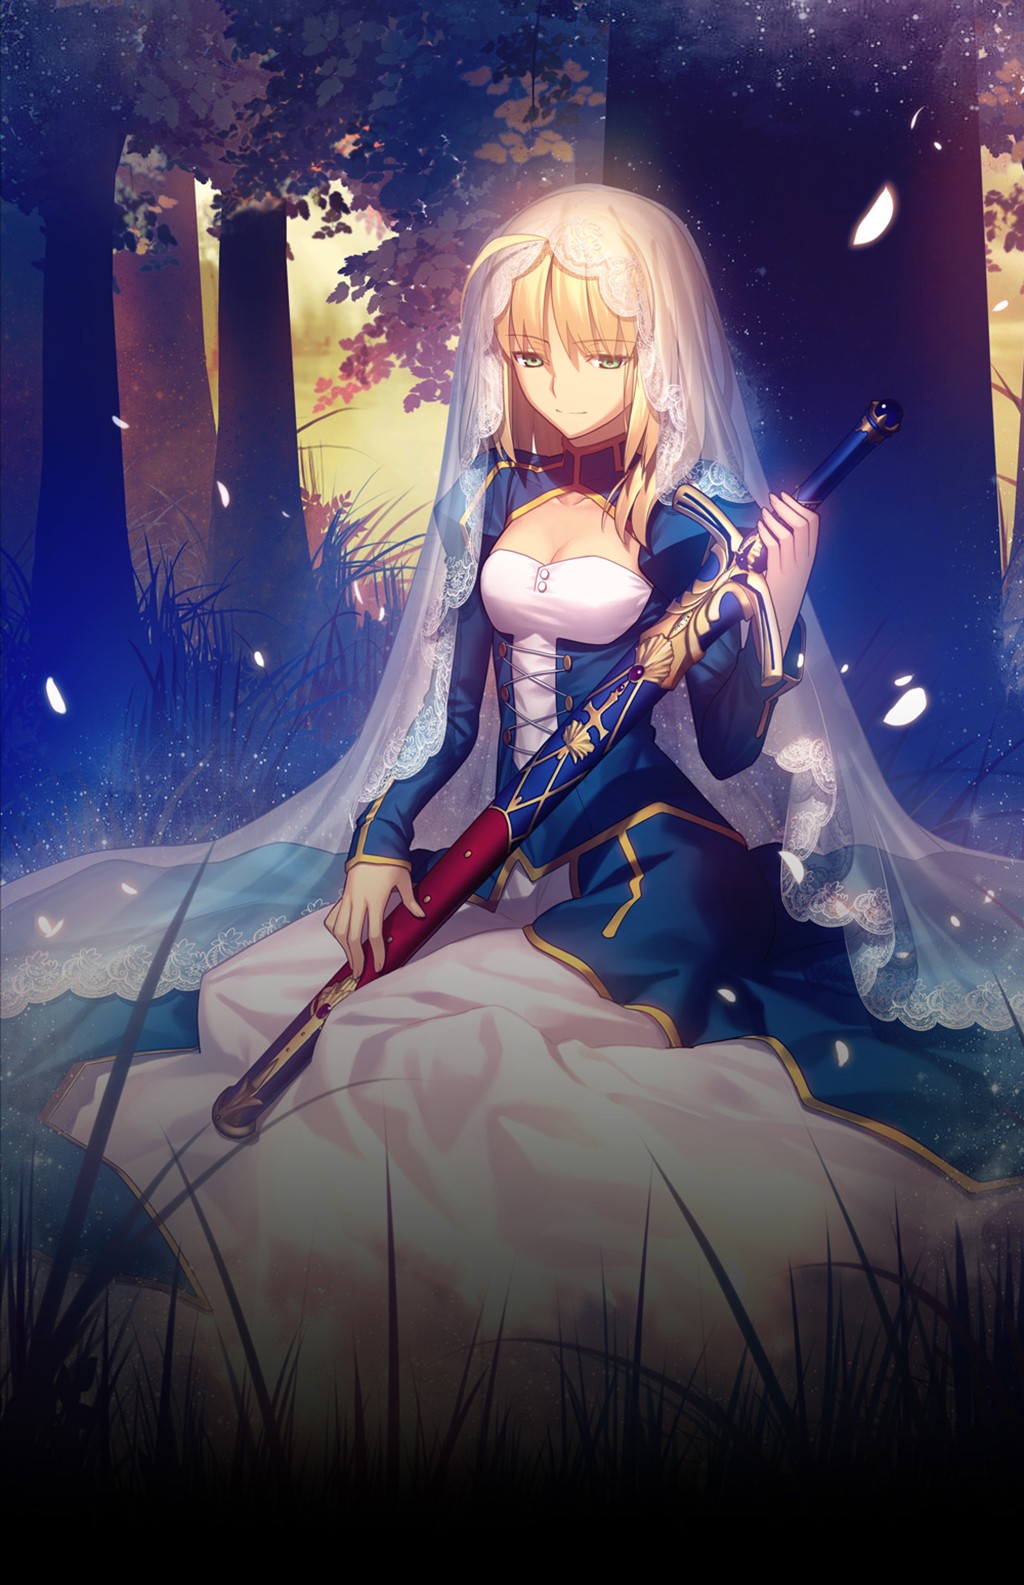 Anime 1024x1585 Fate series Saber dress sword blonde anime girls anime women with swords weapon fantasy art fantasy girl